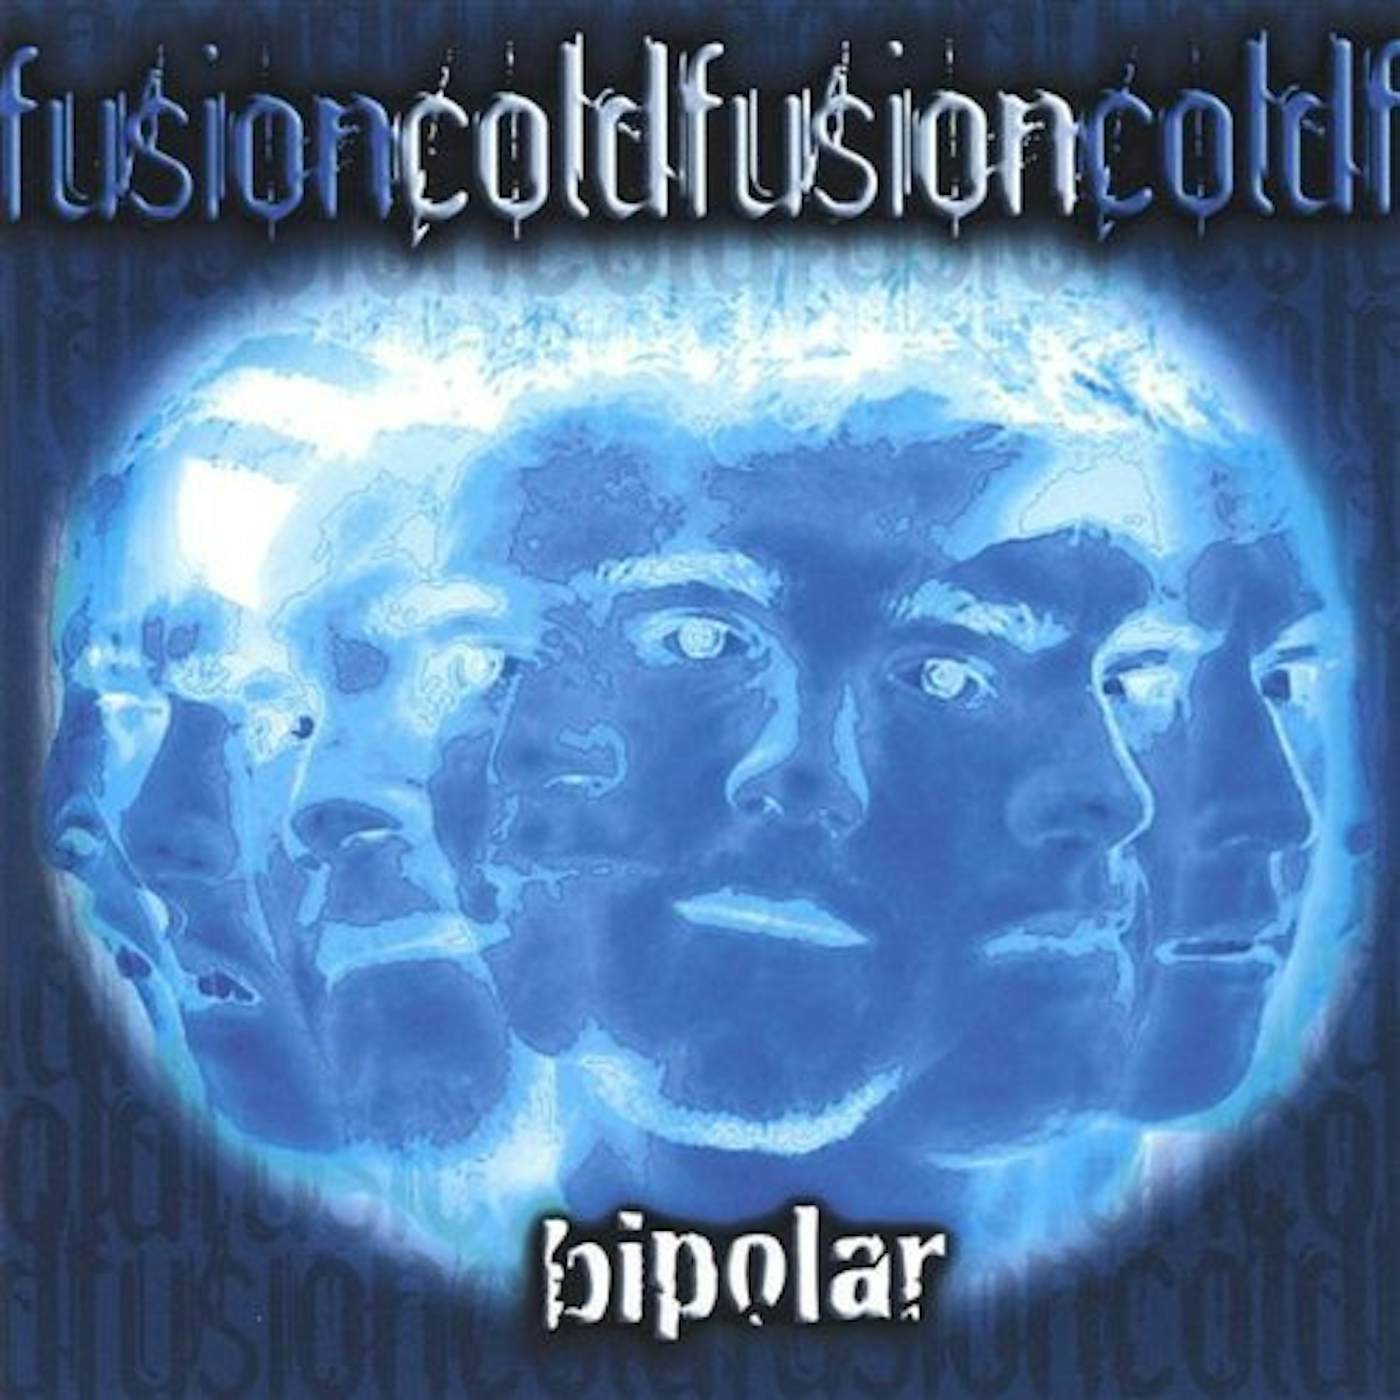 ColdFusion BIPOLAR CD